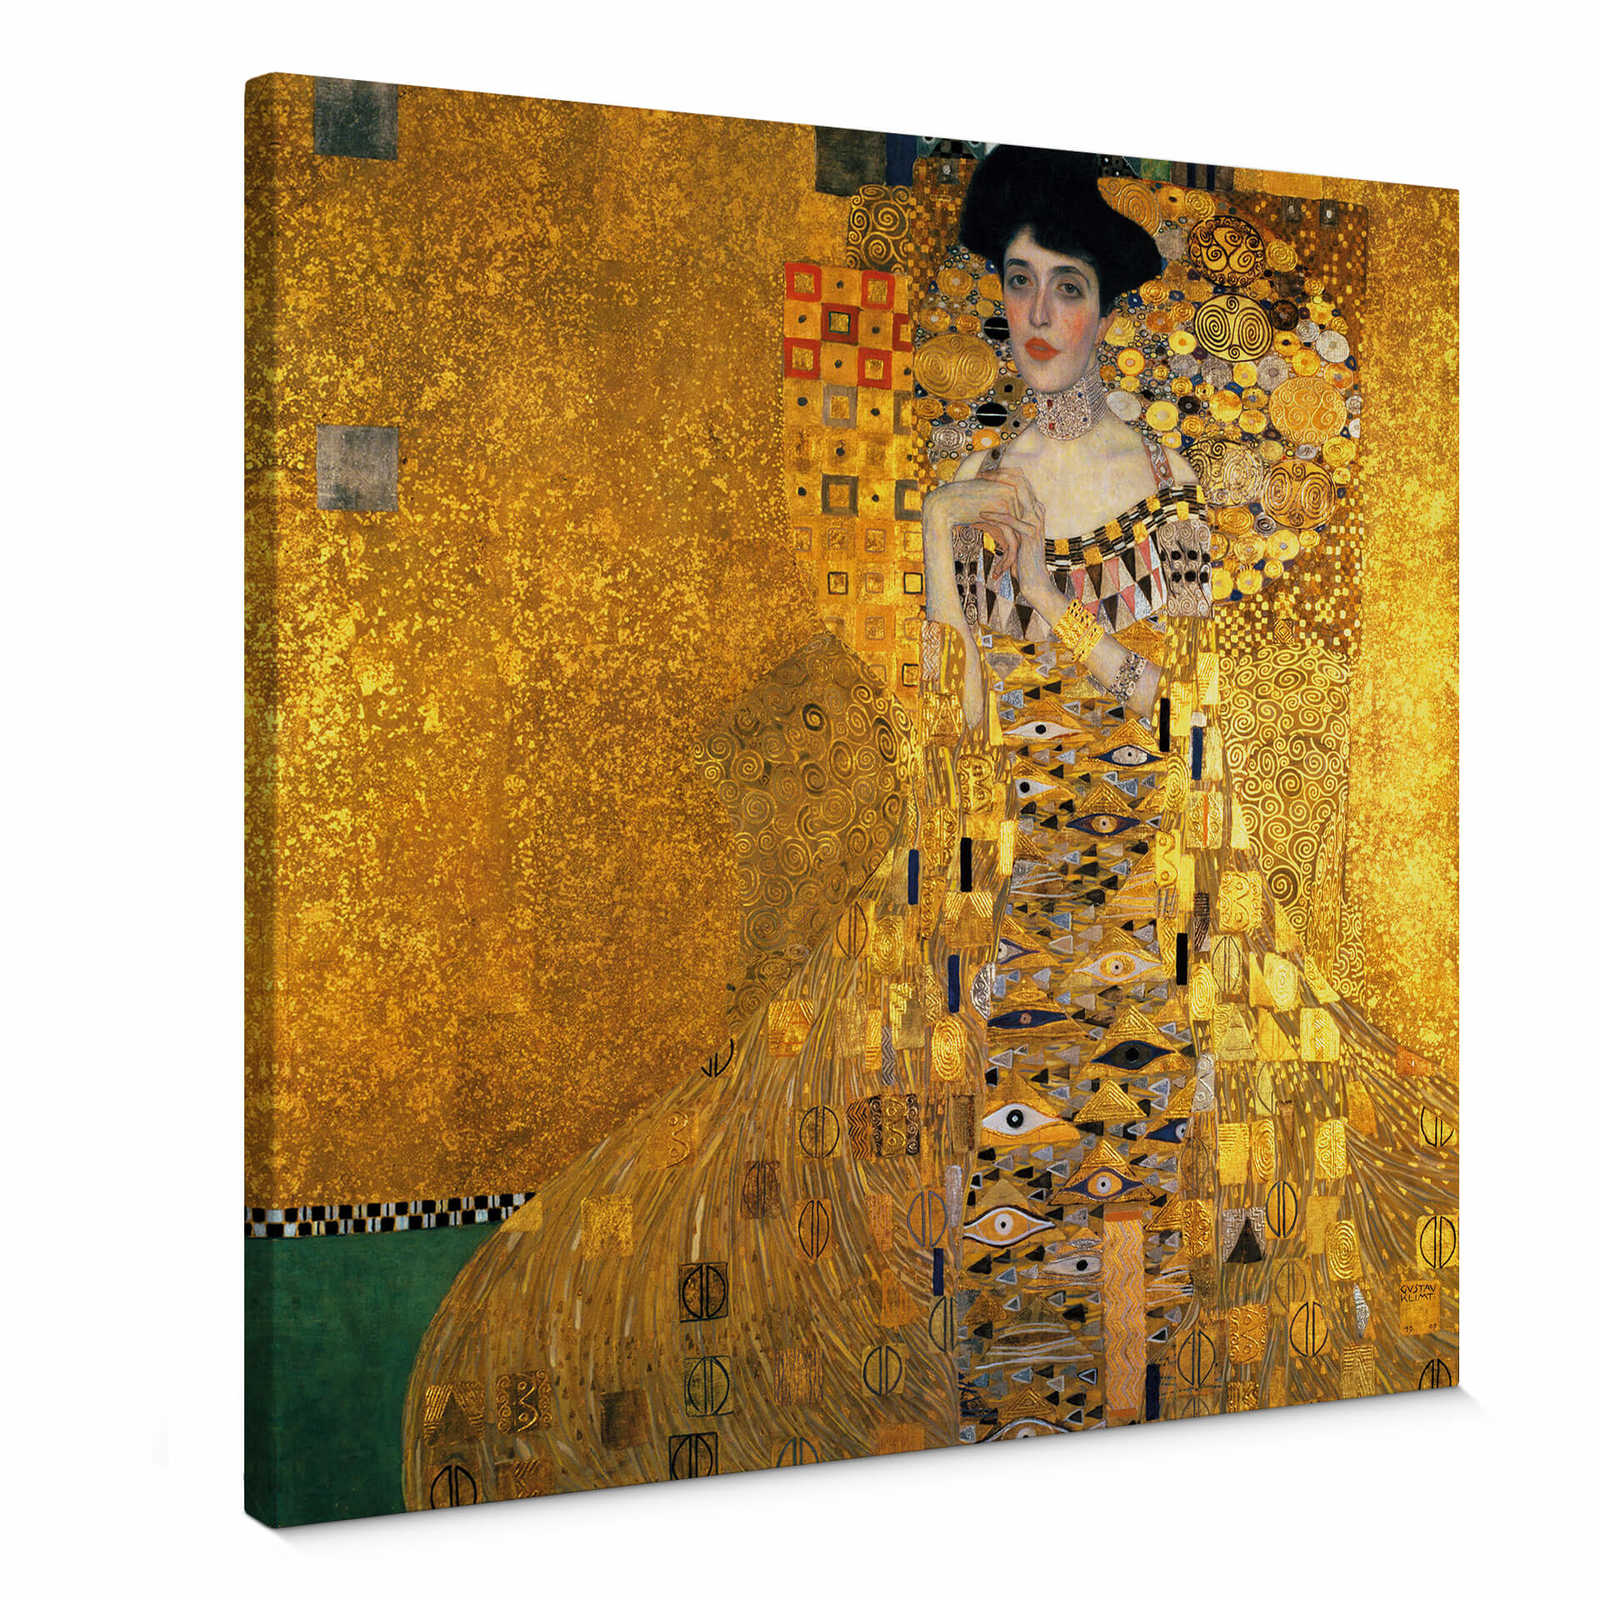         Square canvas print "Adele" by Gustav Klimt
    